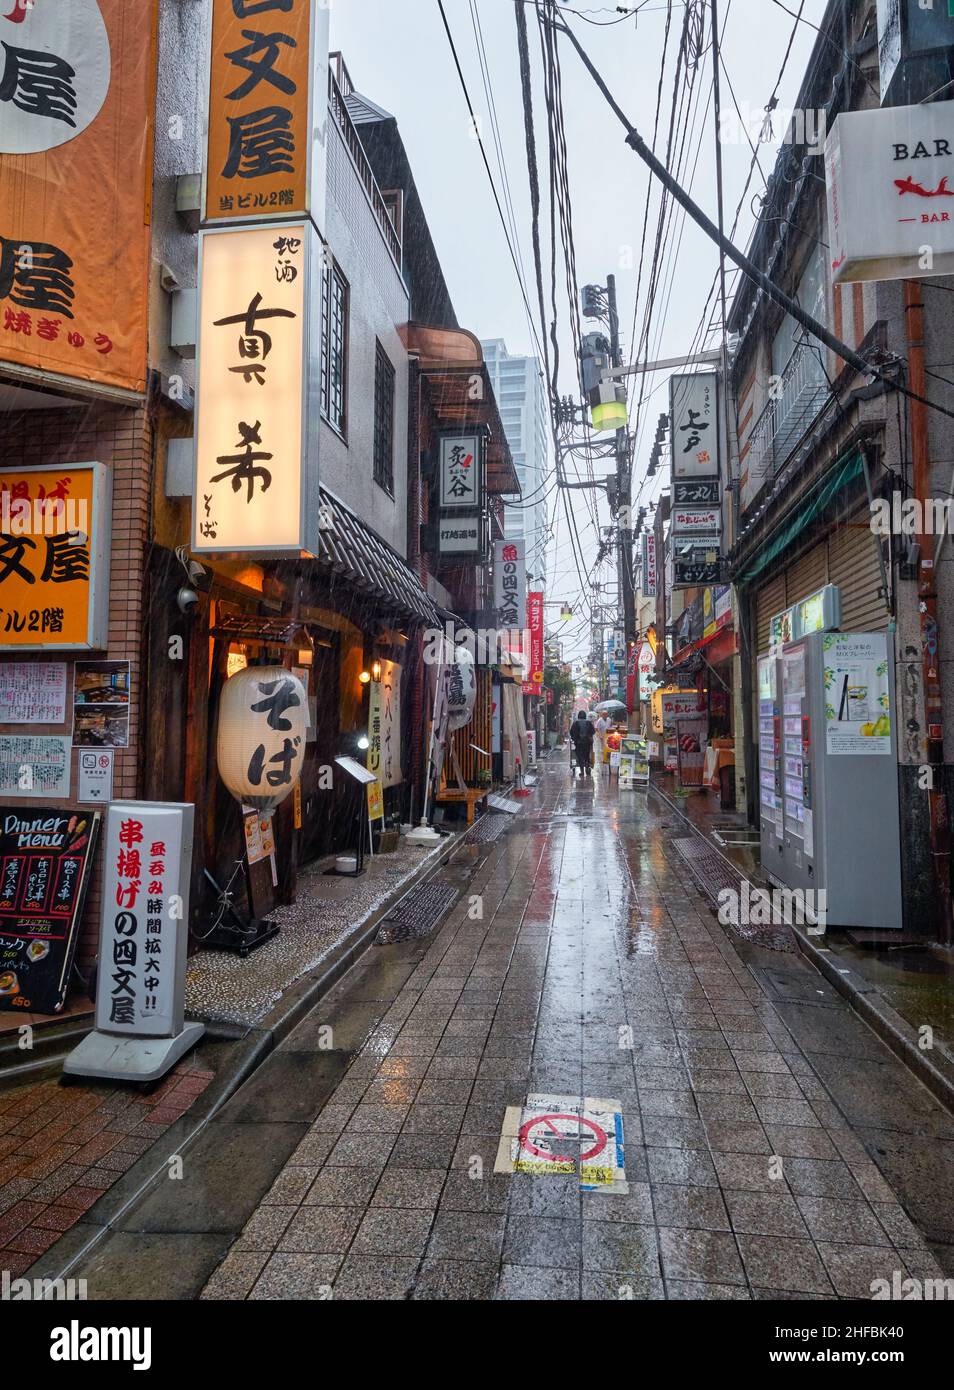 Tokyo, Japan - October 25, 2019: The view of the old market street with bars and restaurants under the heavy rain at twilight. Shibuya city. Tokyo. Ja Stock Photo